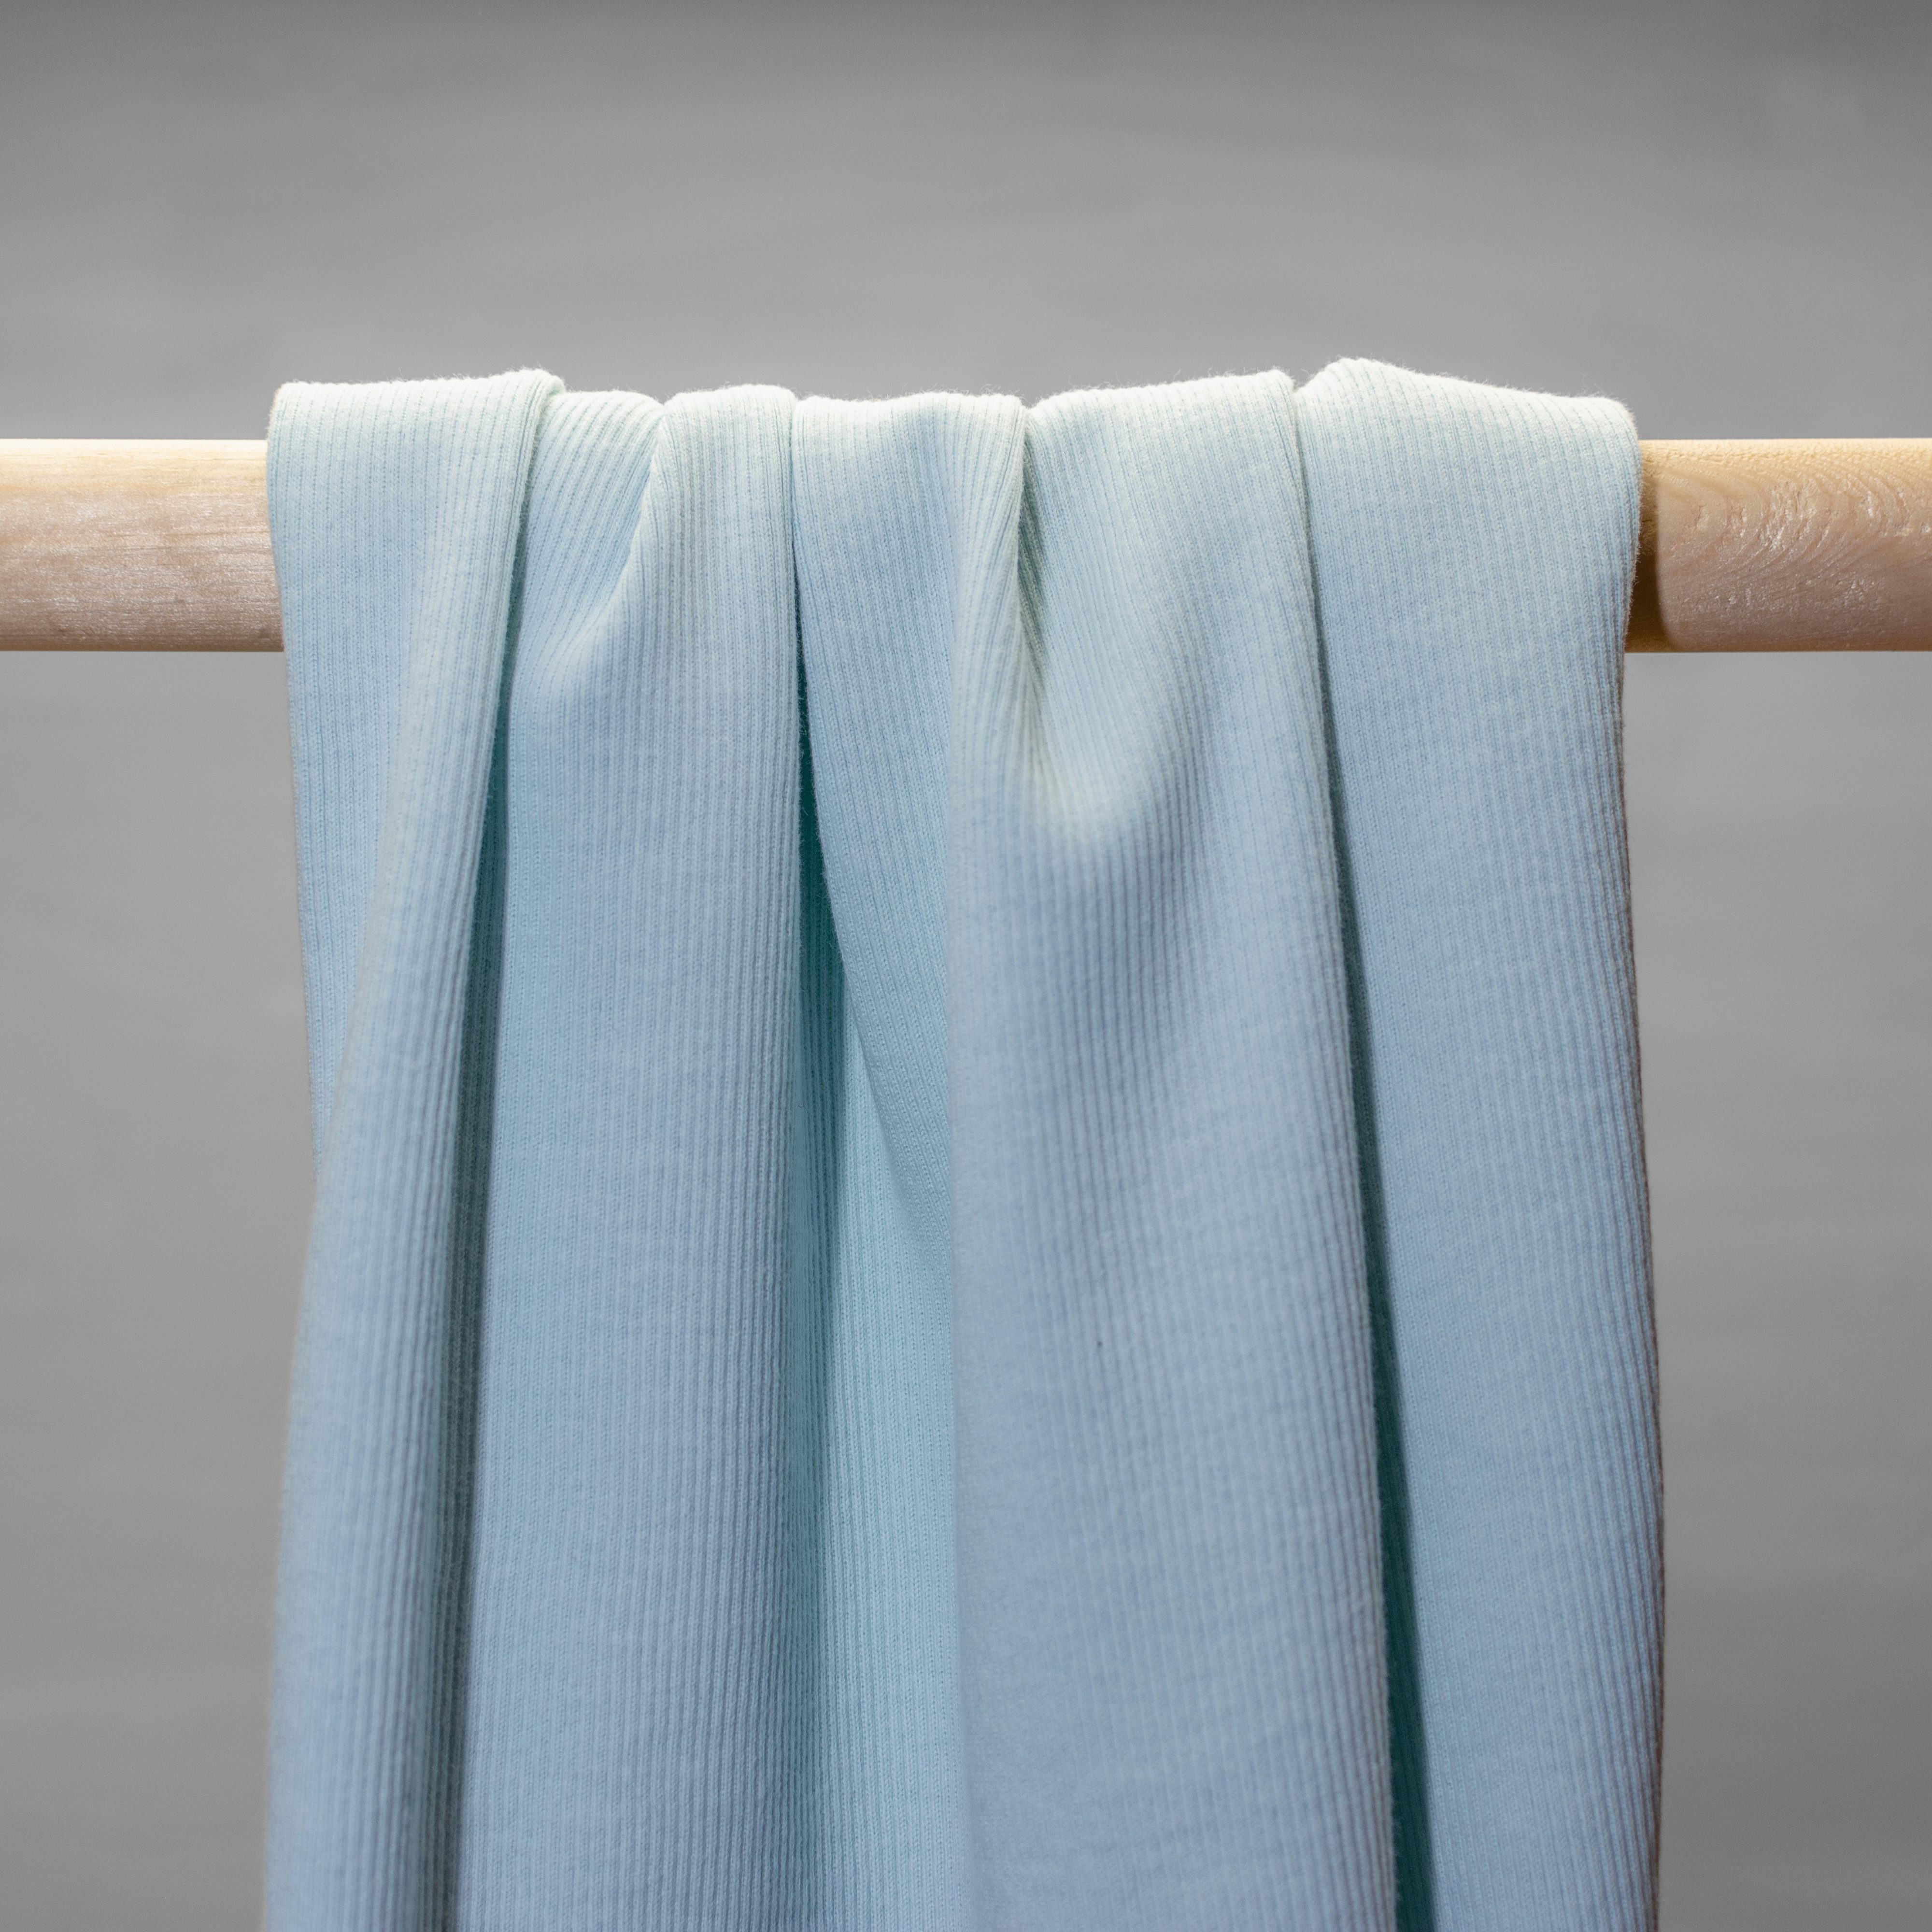 Powder blue rib knit jersey hanging in folds.